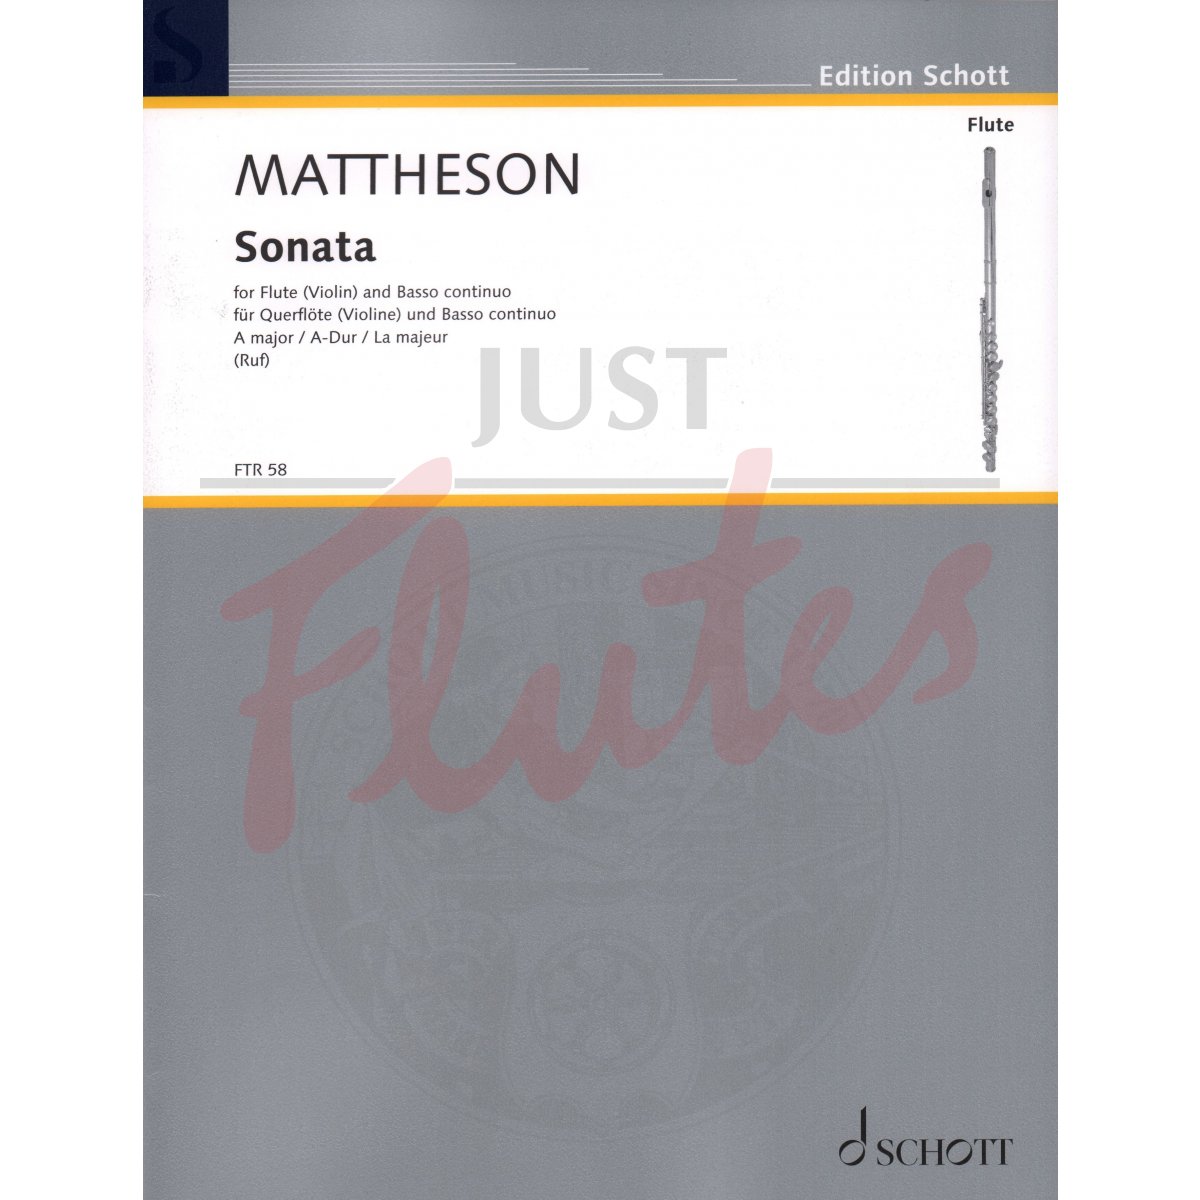 Sonata in A major for Flute and Basso Continuo